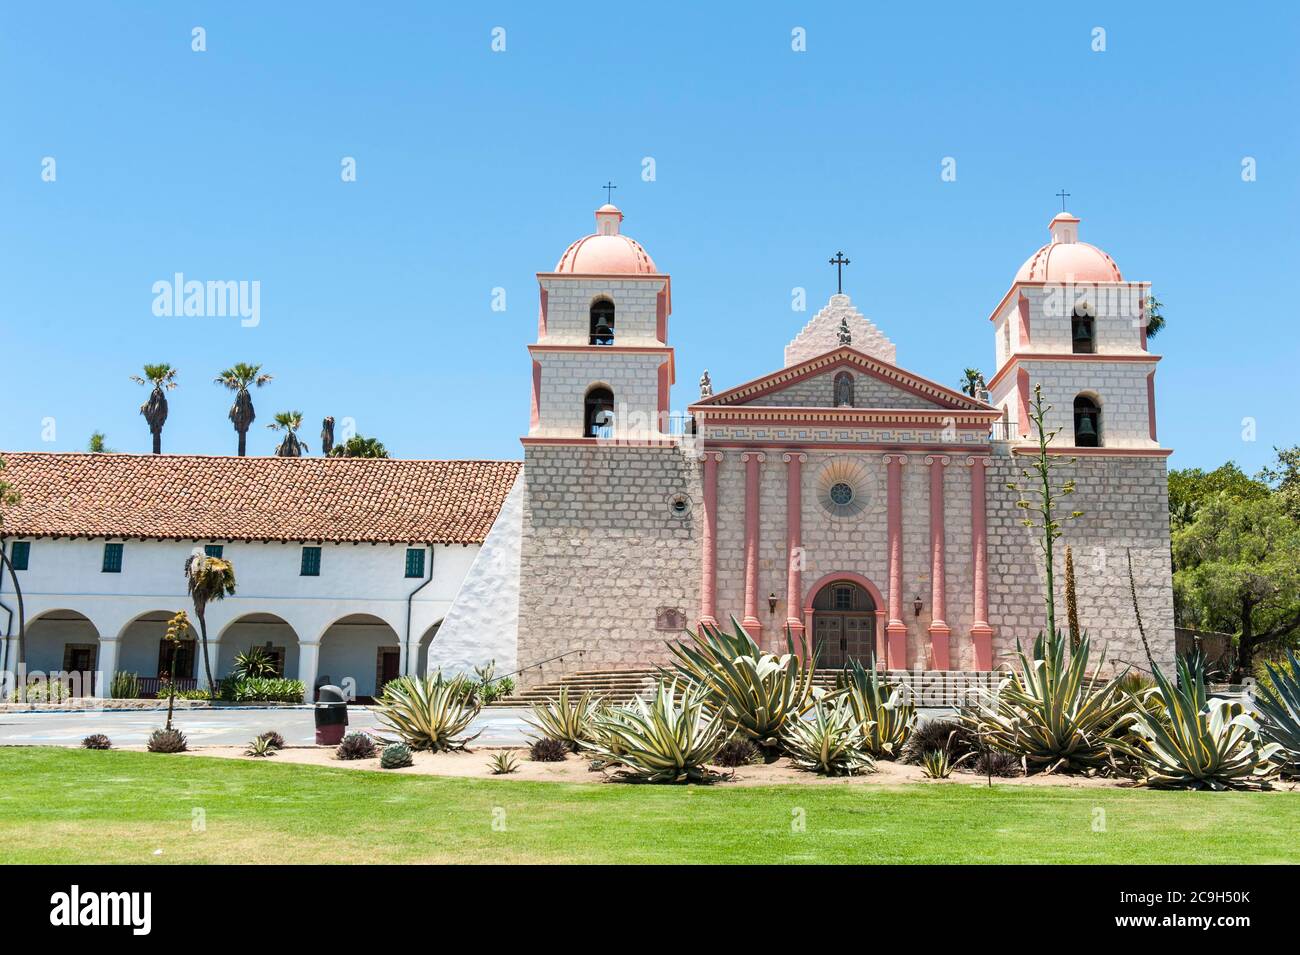 Katholische Kirche, alte spanische Franziskanermission, Haupteingang, zwei Kirchtürme, Mission Santa Barbara, Santa Barbara, Kalifornien, USA Stockfoto